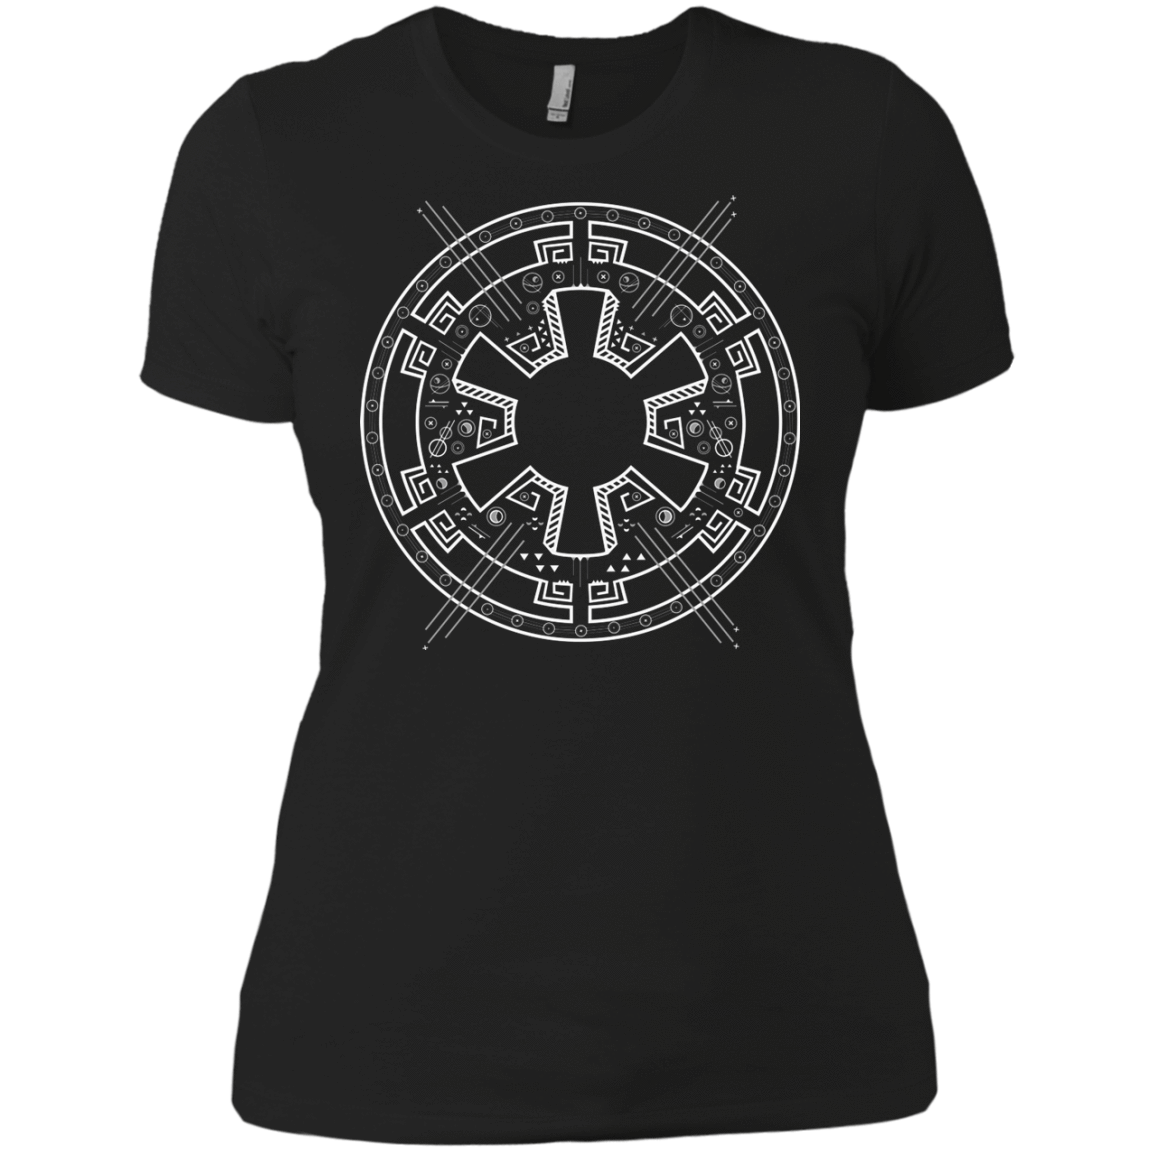 T-Shirts Black / X-Small Tech empire Women's Premium T-Shirt